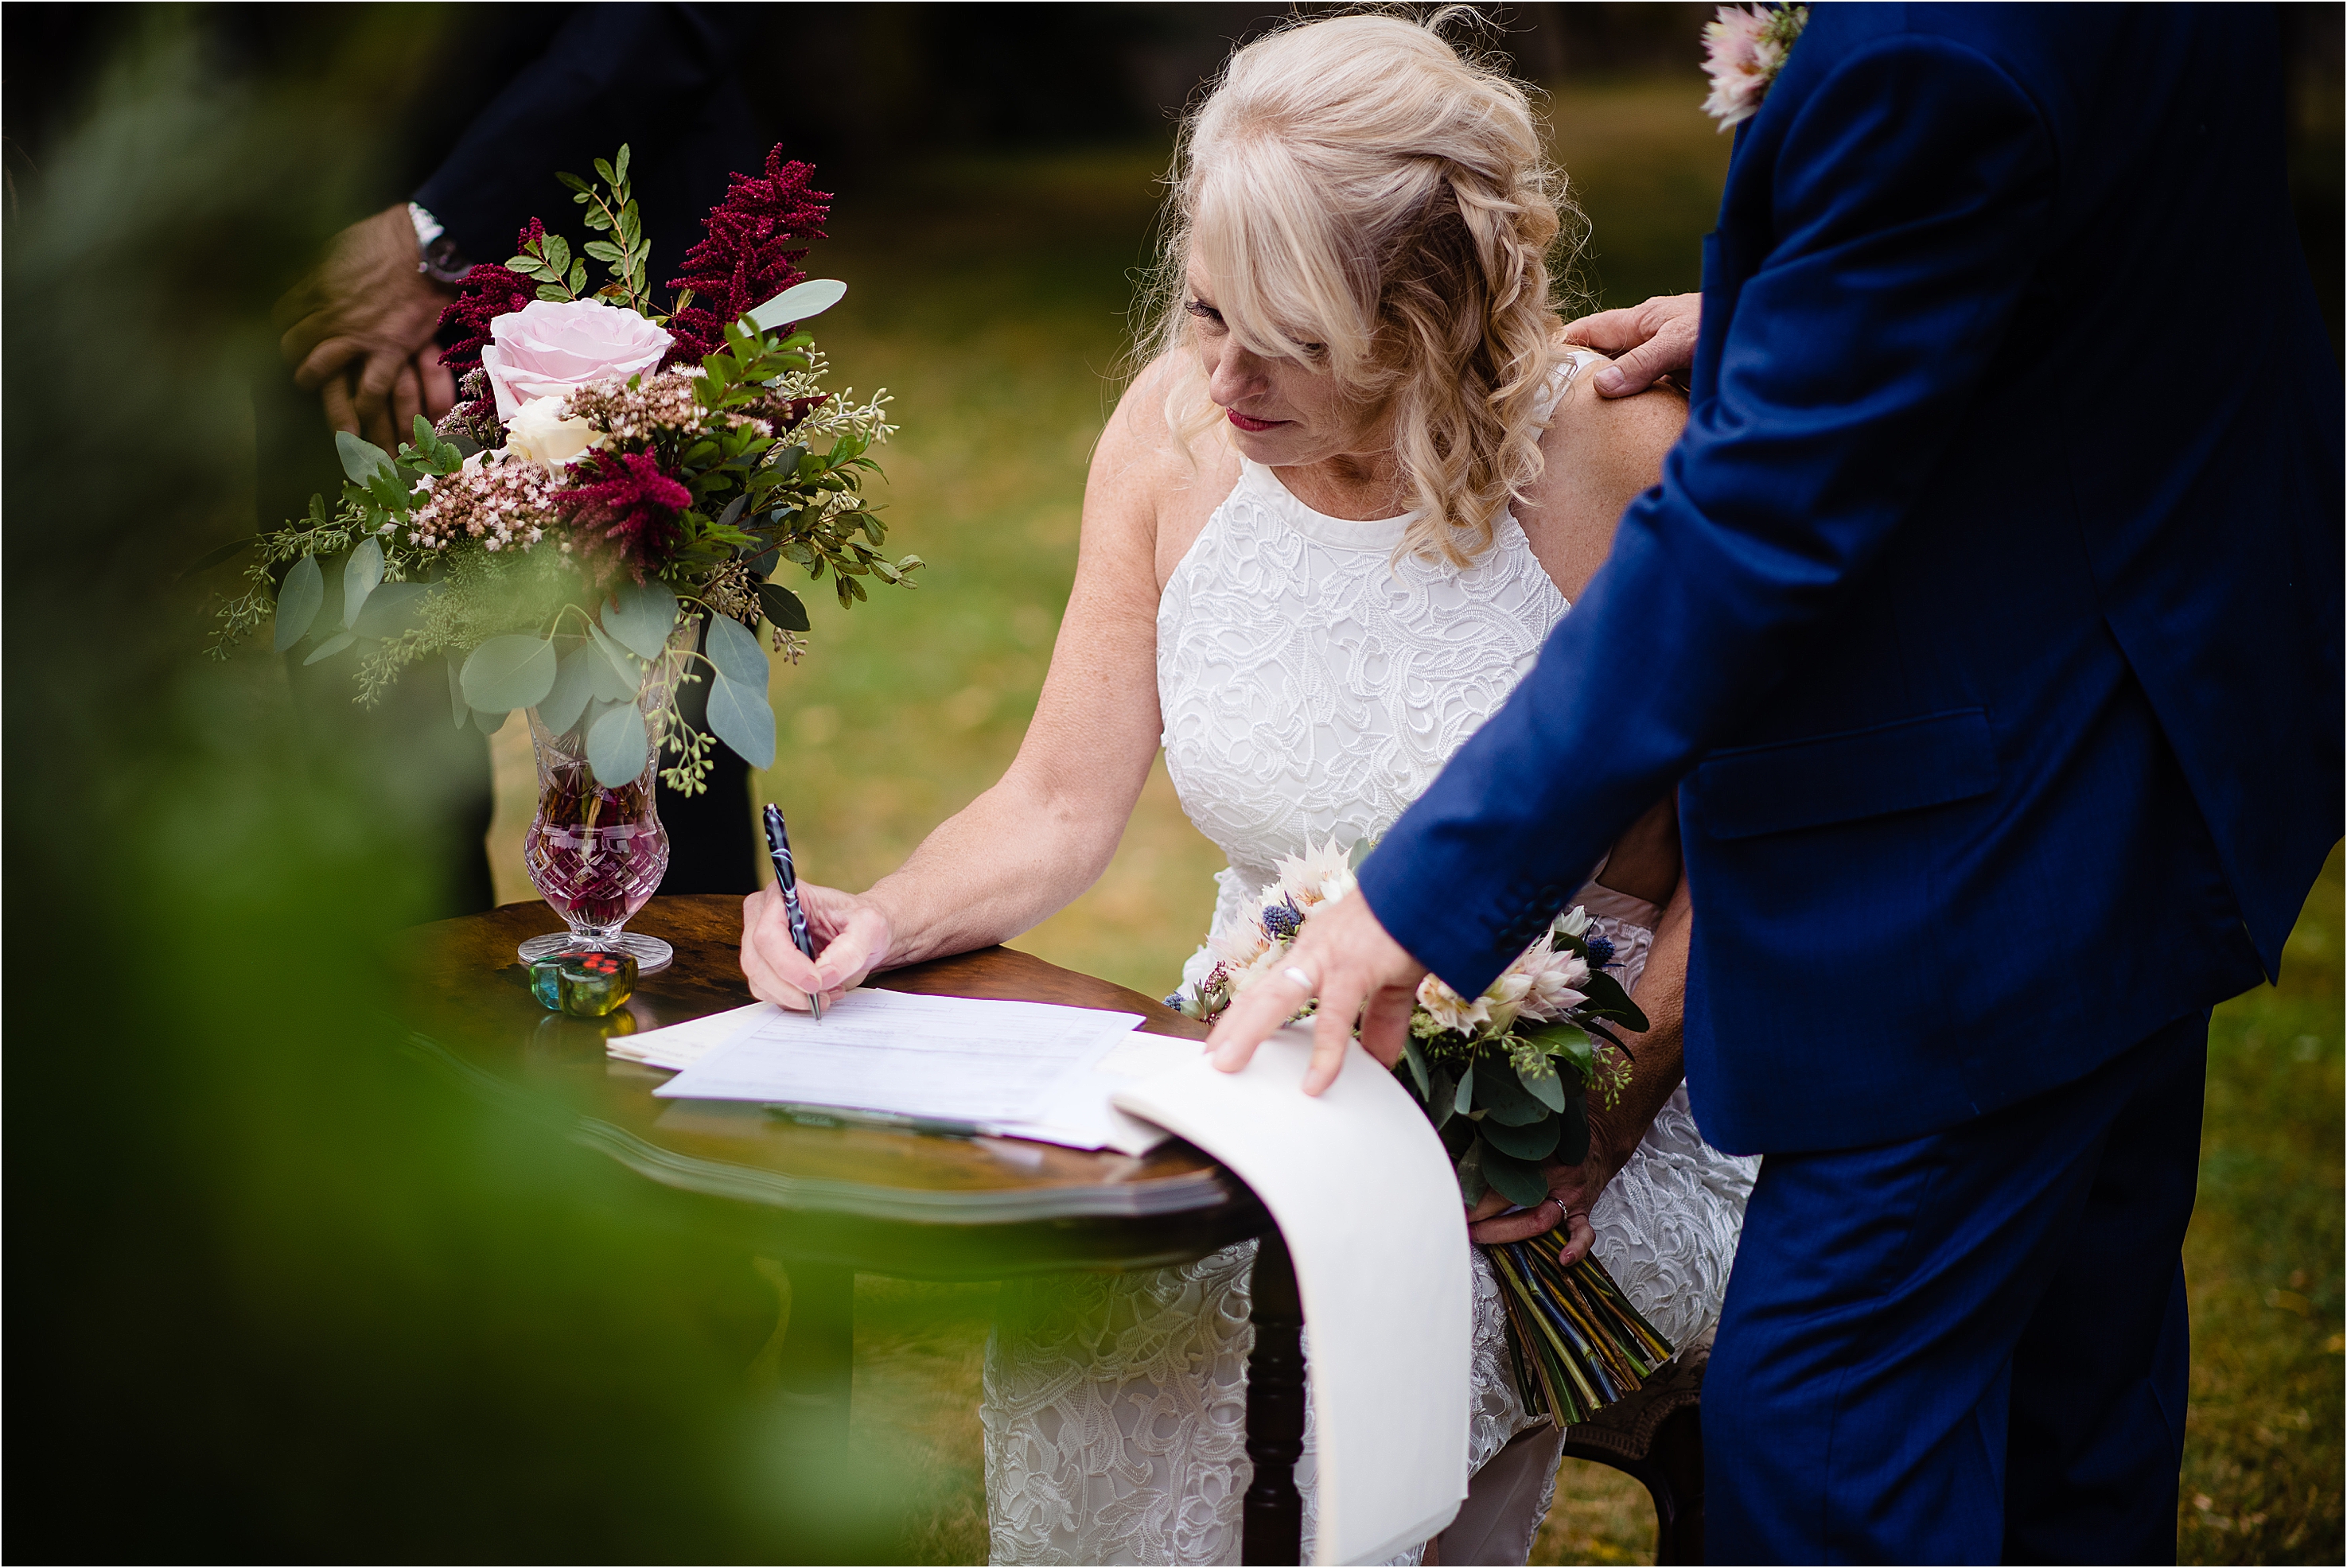 bride signs the registry in halfmoon bay wedding photo taken by Sherry NElsen